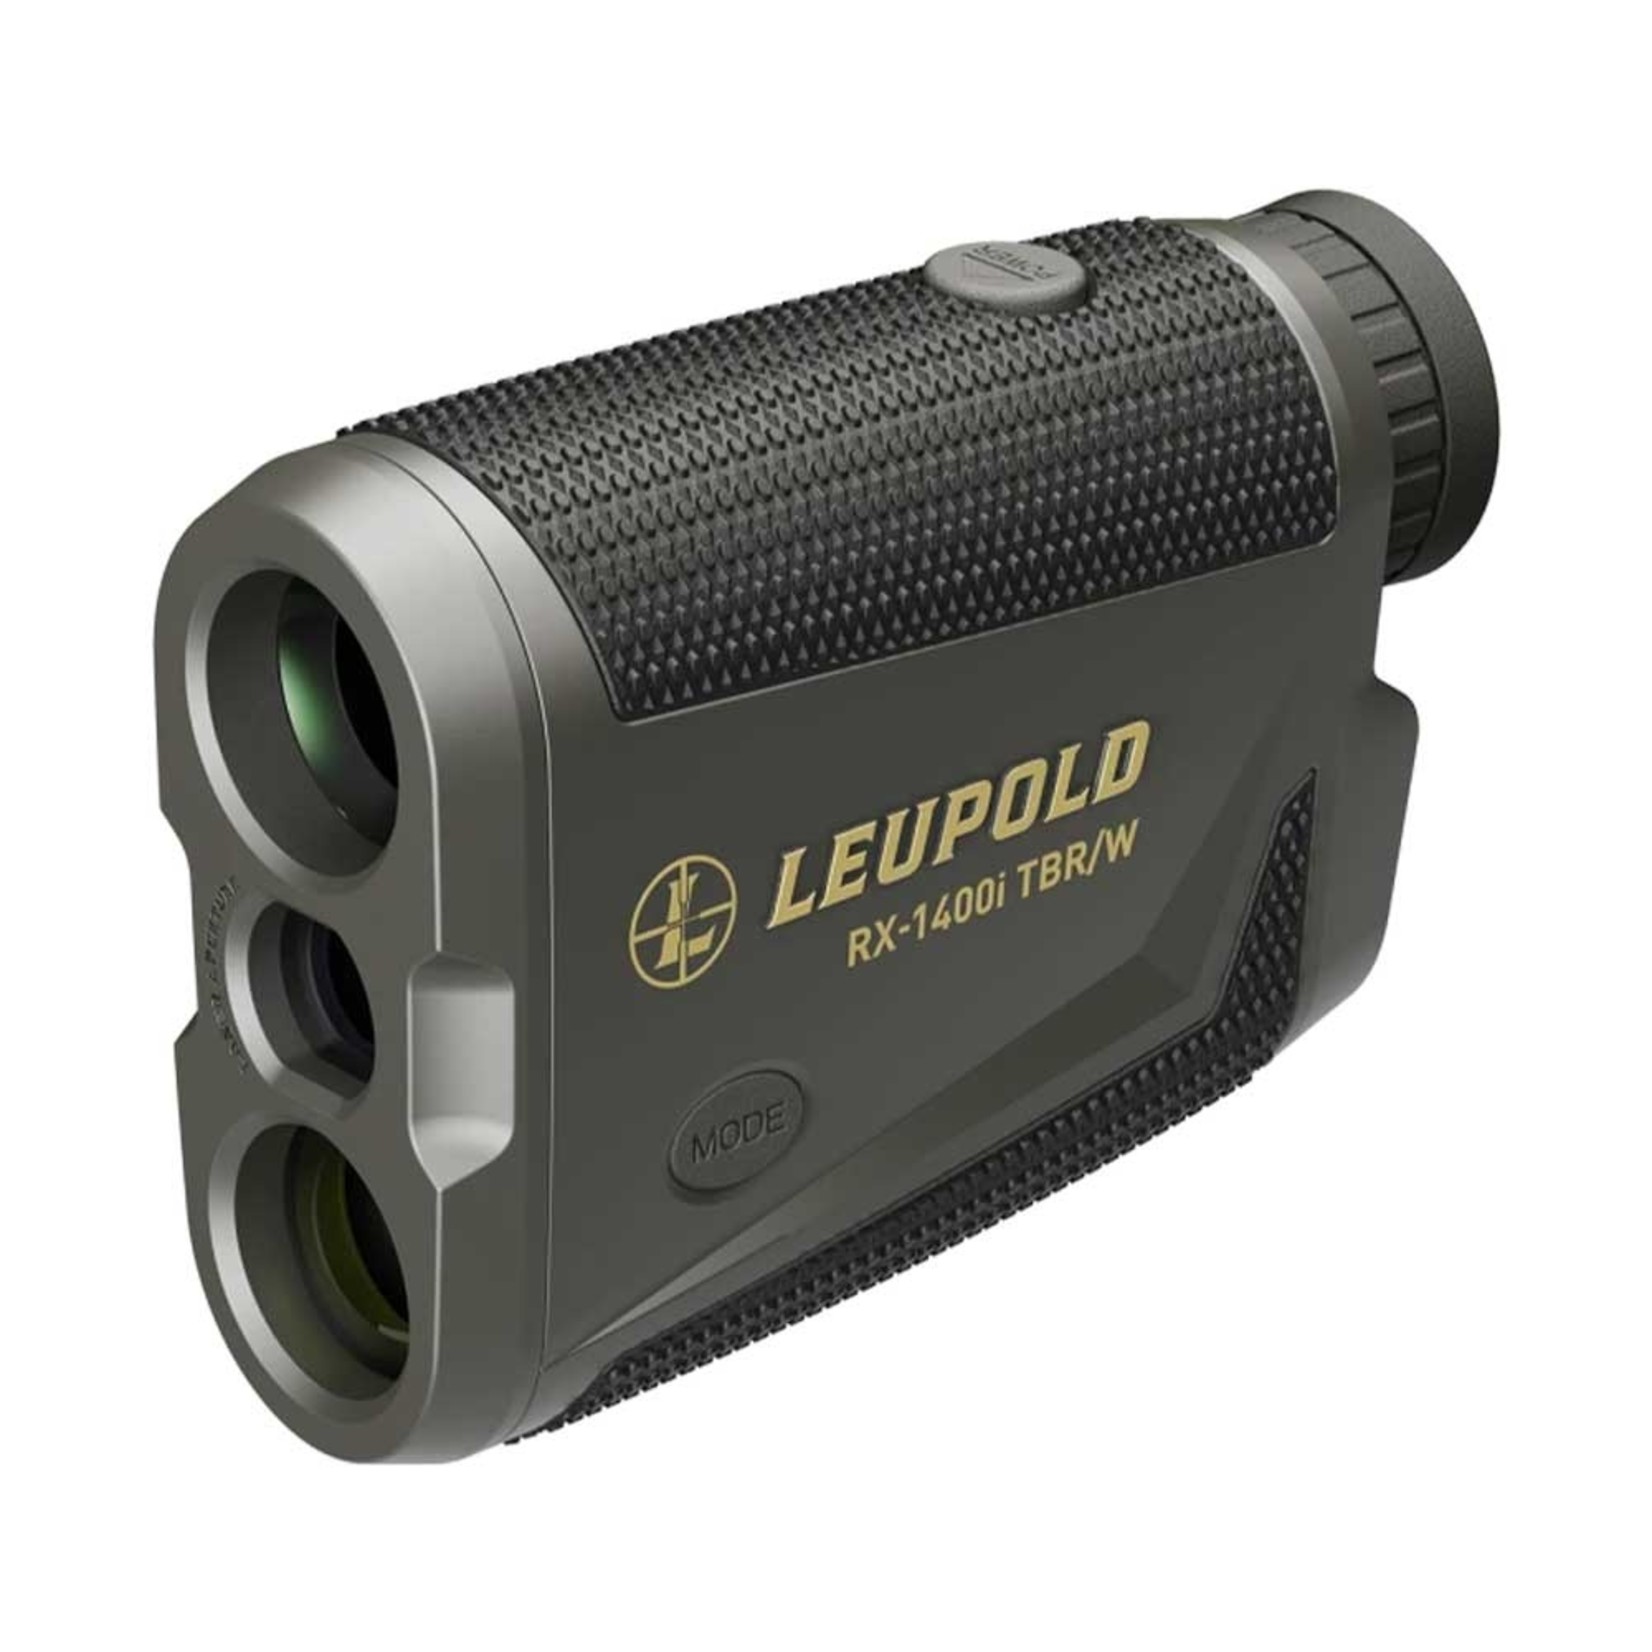 Leupold & Stevens Leupold RX-1400I TBR/W